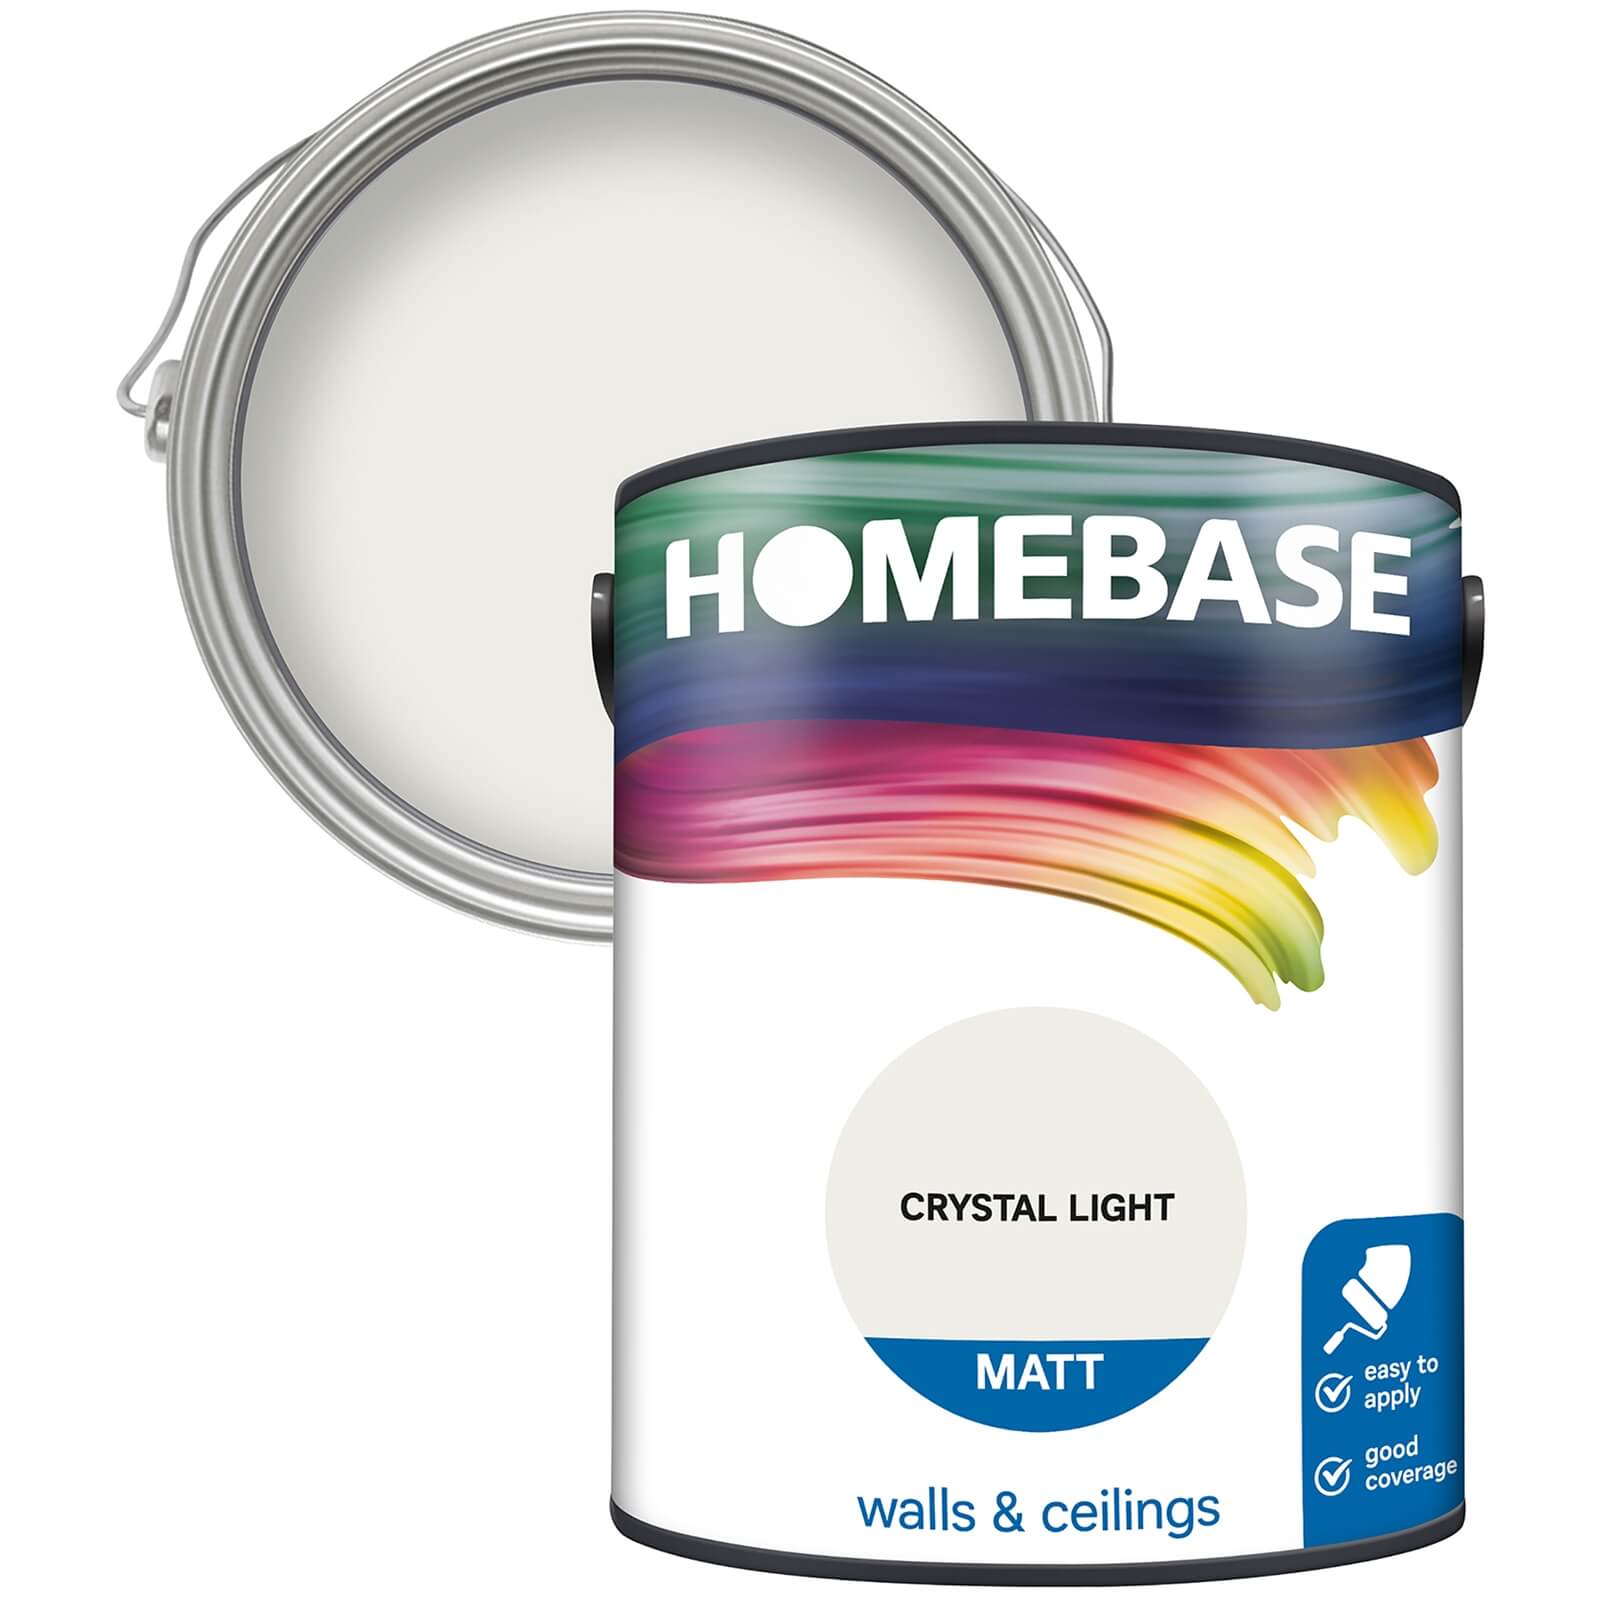 Homebase Matt Emulsion Paint Crystal Light - 5L